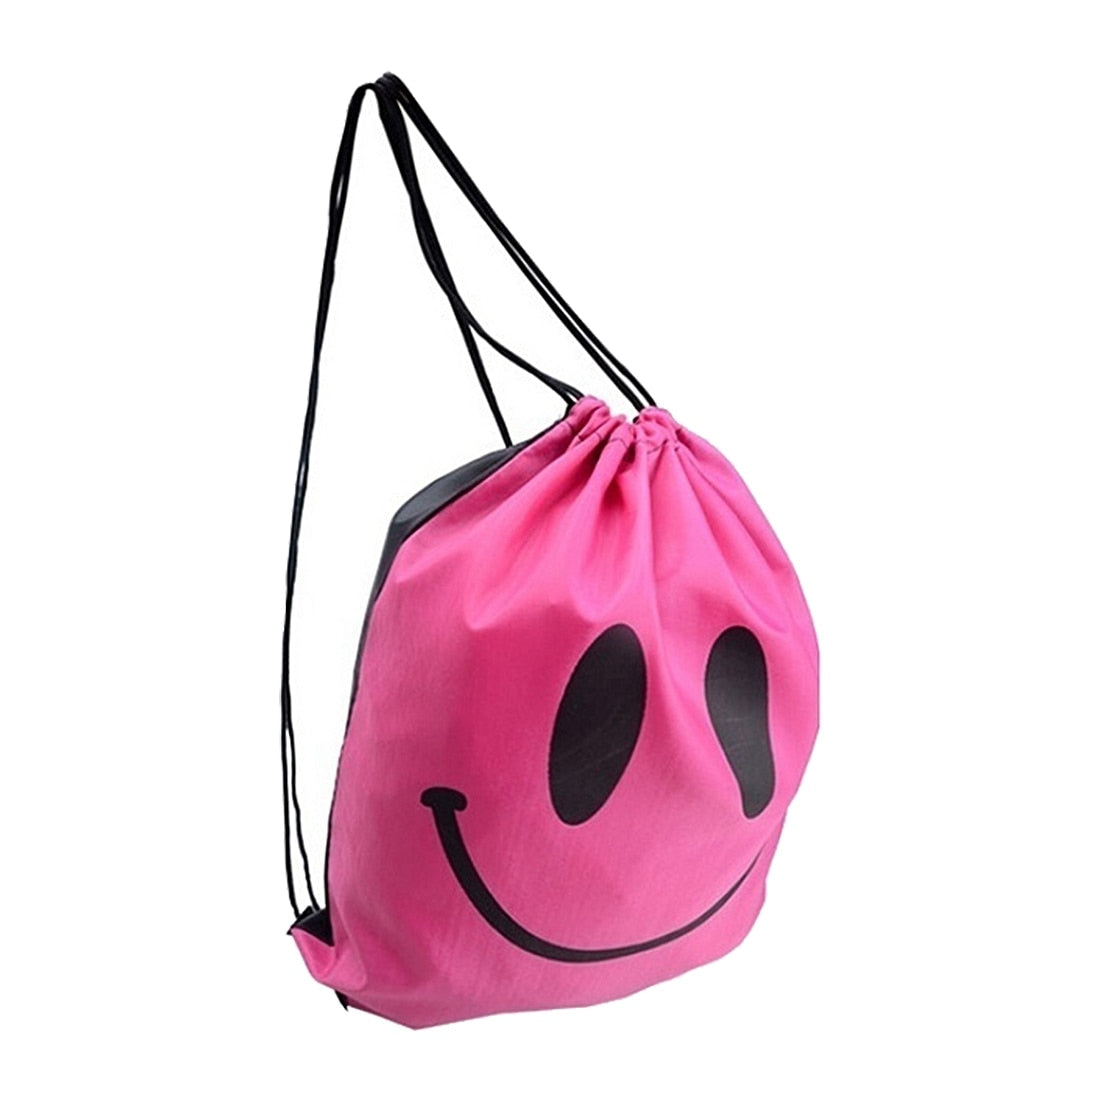 Smile lovely backpack  Drawstring Waterproof bag Rose red - ebowsos